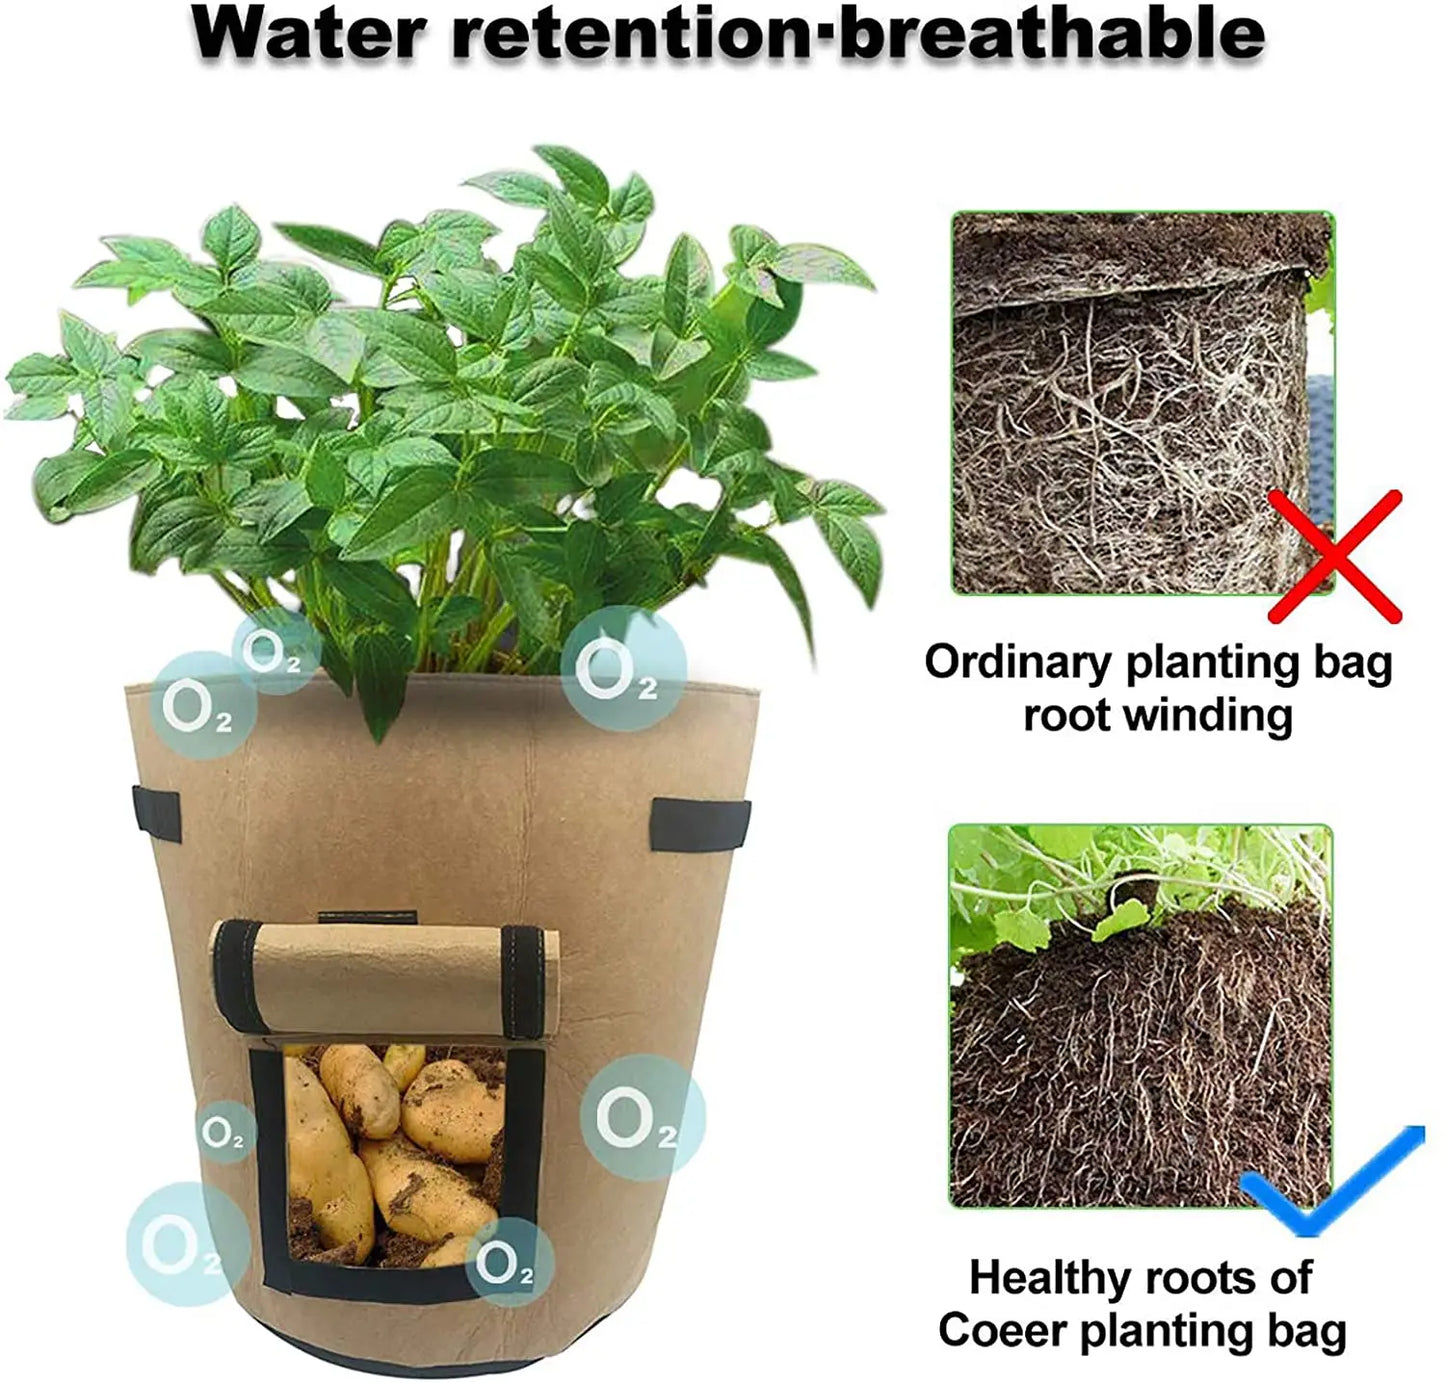 3 Size Felt plant grow bags nonwoven fabric garden potato pot greenhouse vegetable growing bags moisturizing vertical tools